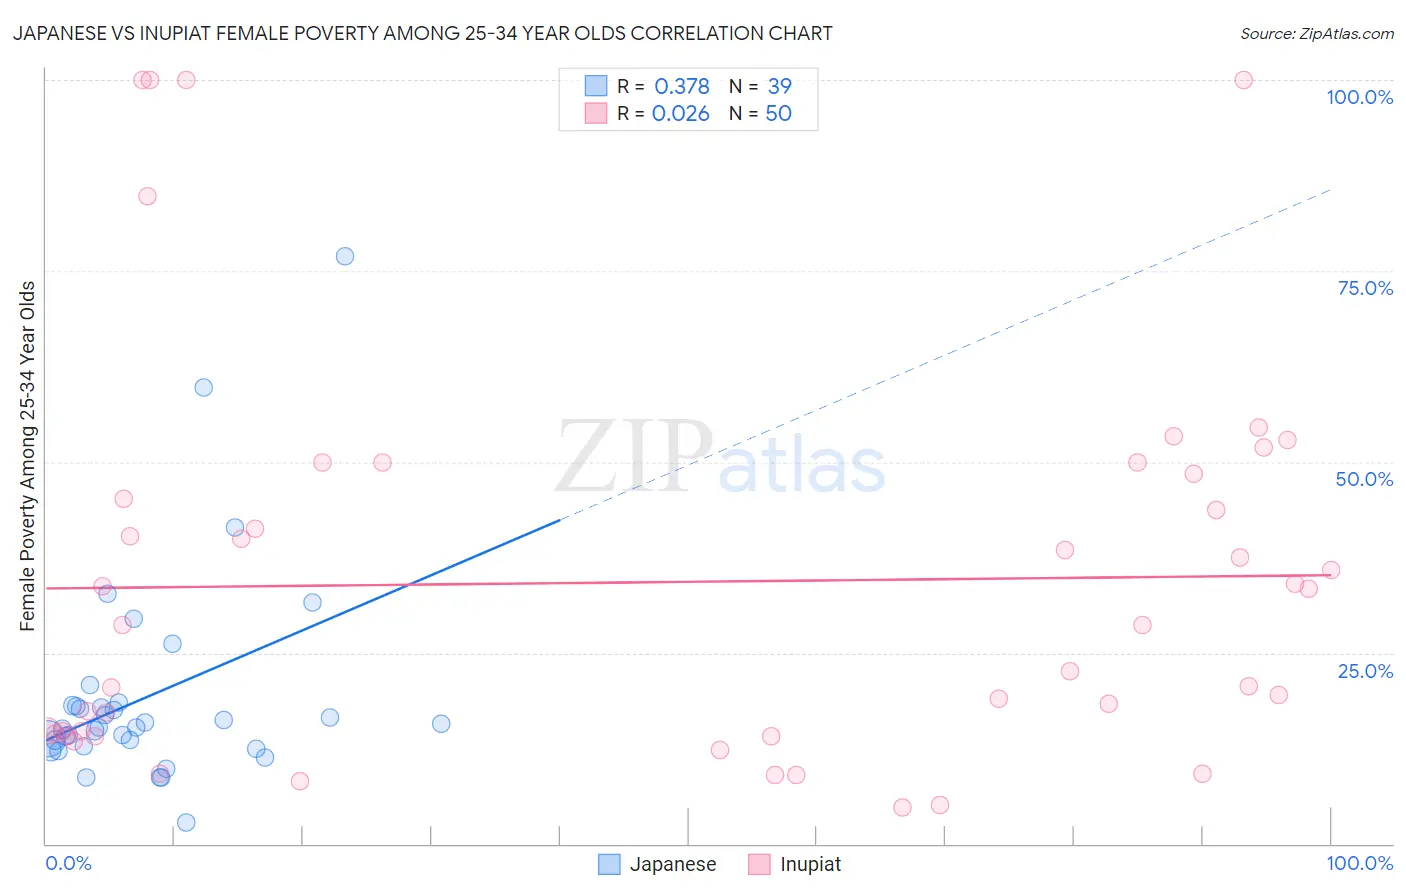 Japanese vs Inupiat Female Poverty Among 25-34 Year Olds